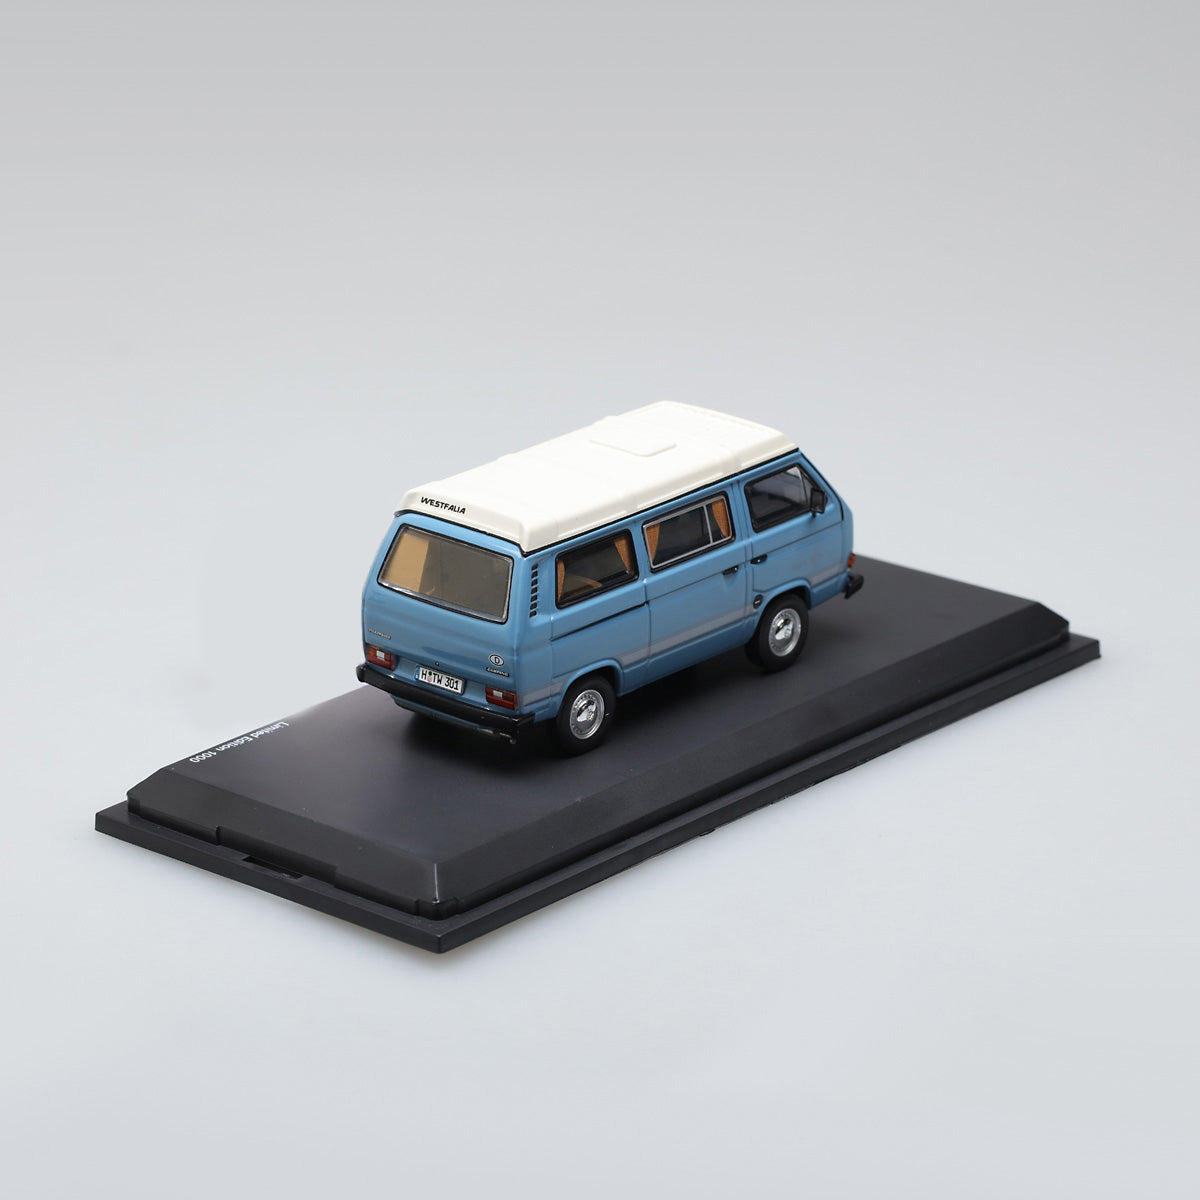 Schuco 1:43 Volkswagen T3a Joker camping bus medium blue 450347600